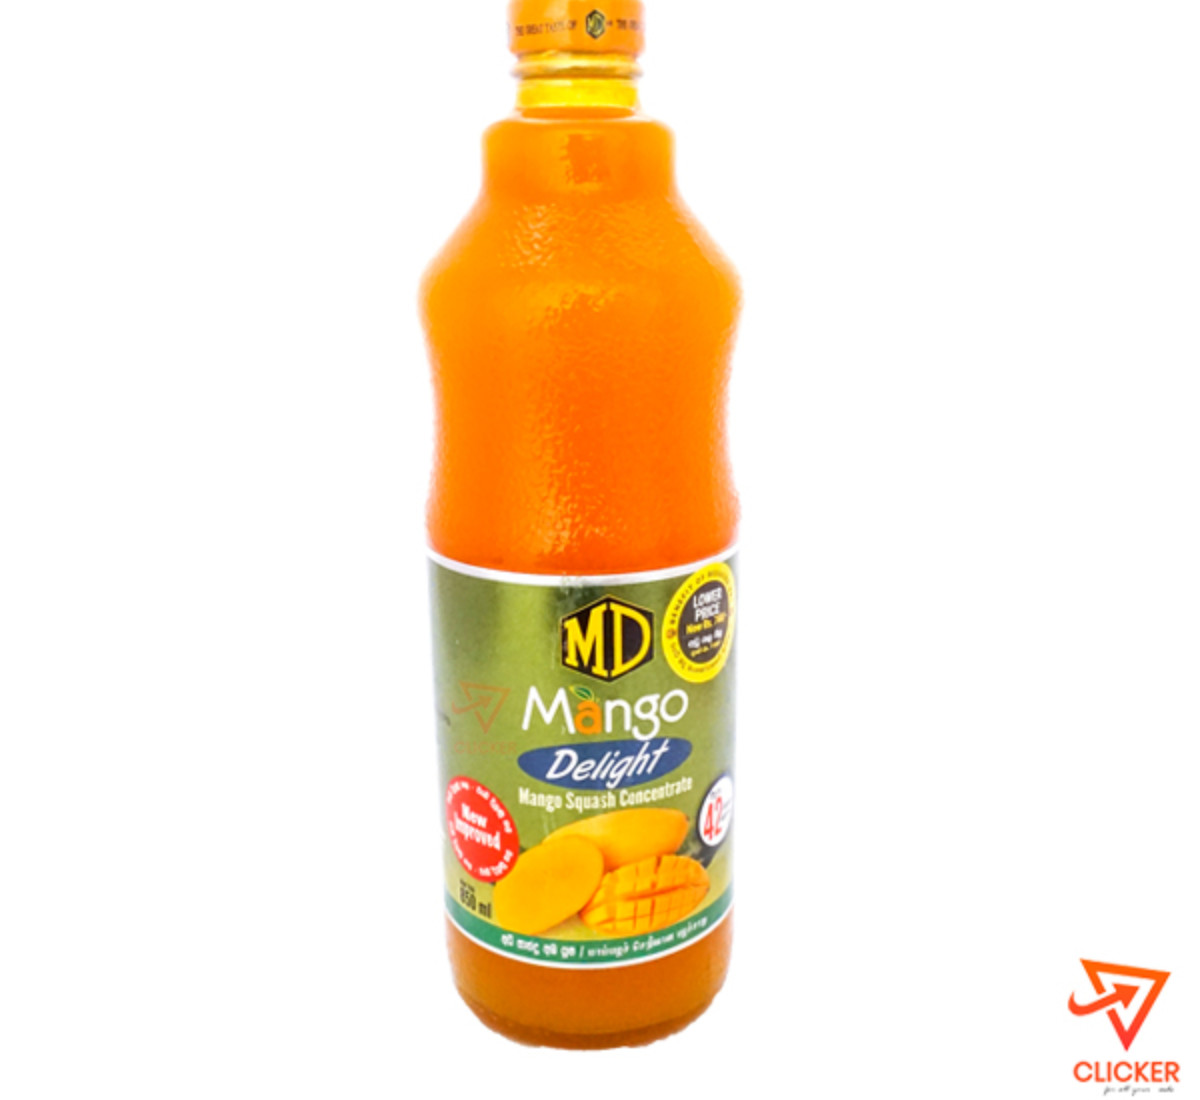 Clicker product 700ml MD mango delight 1148